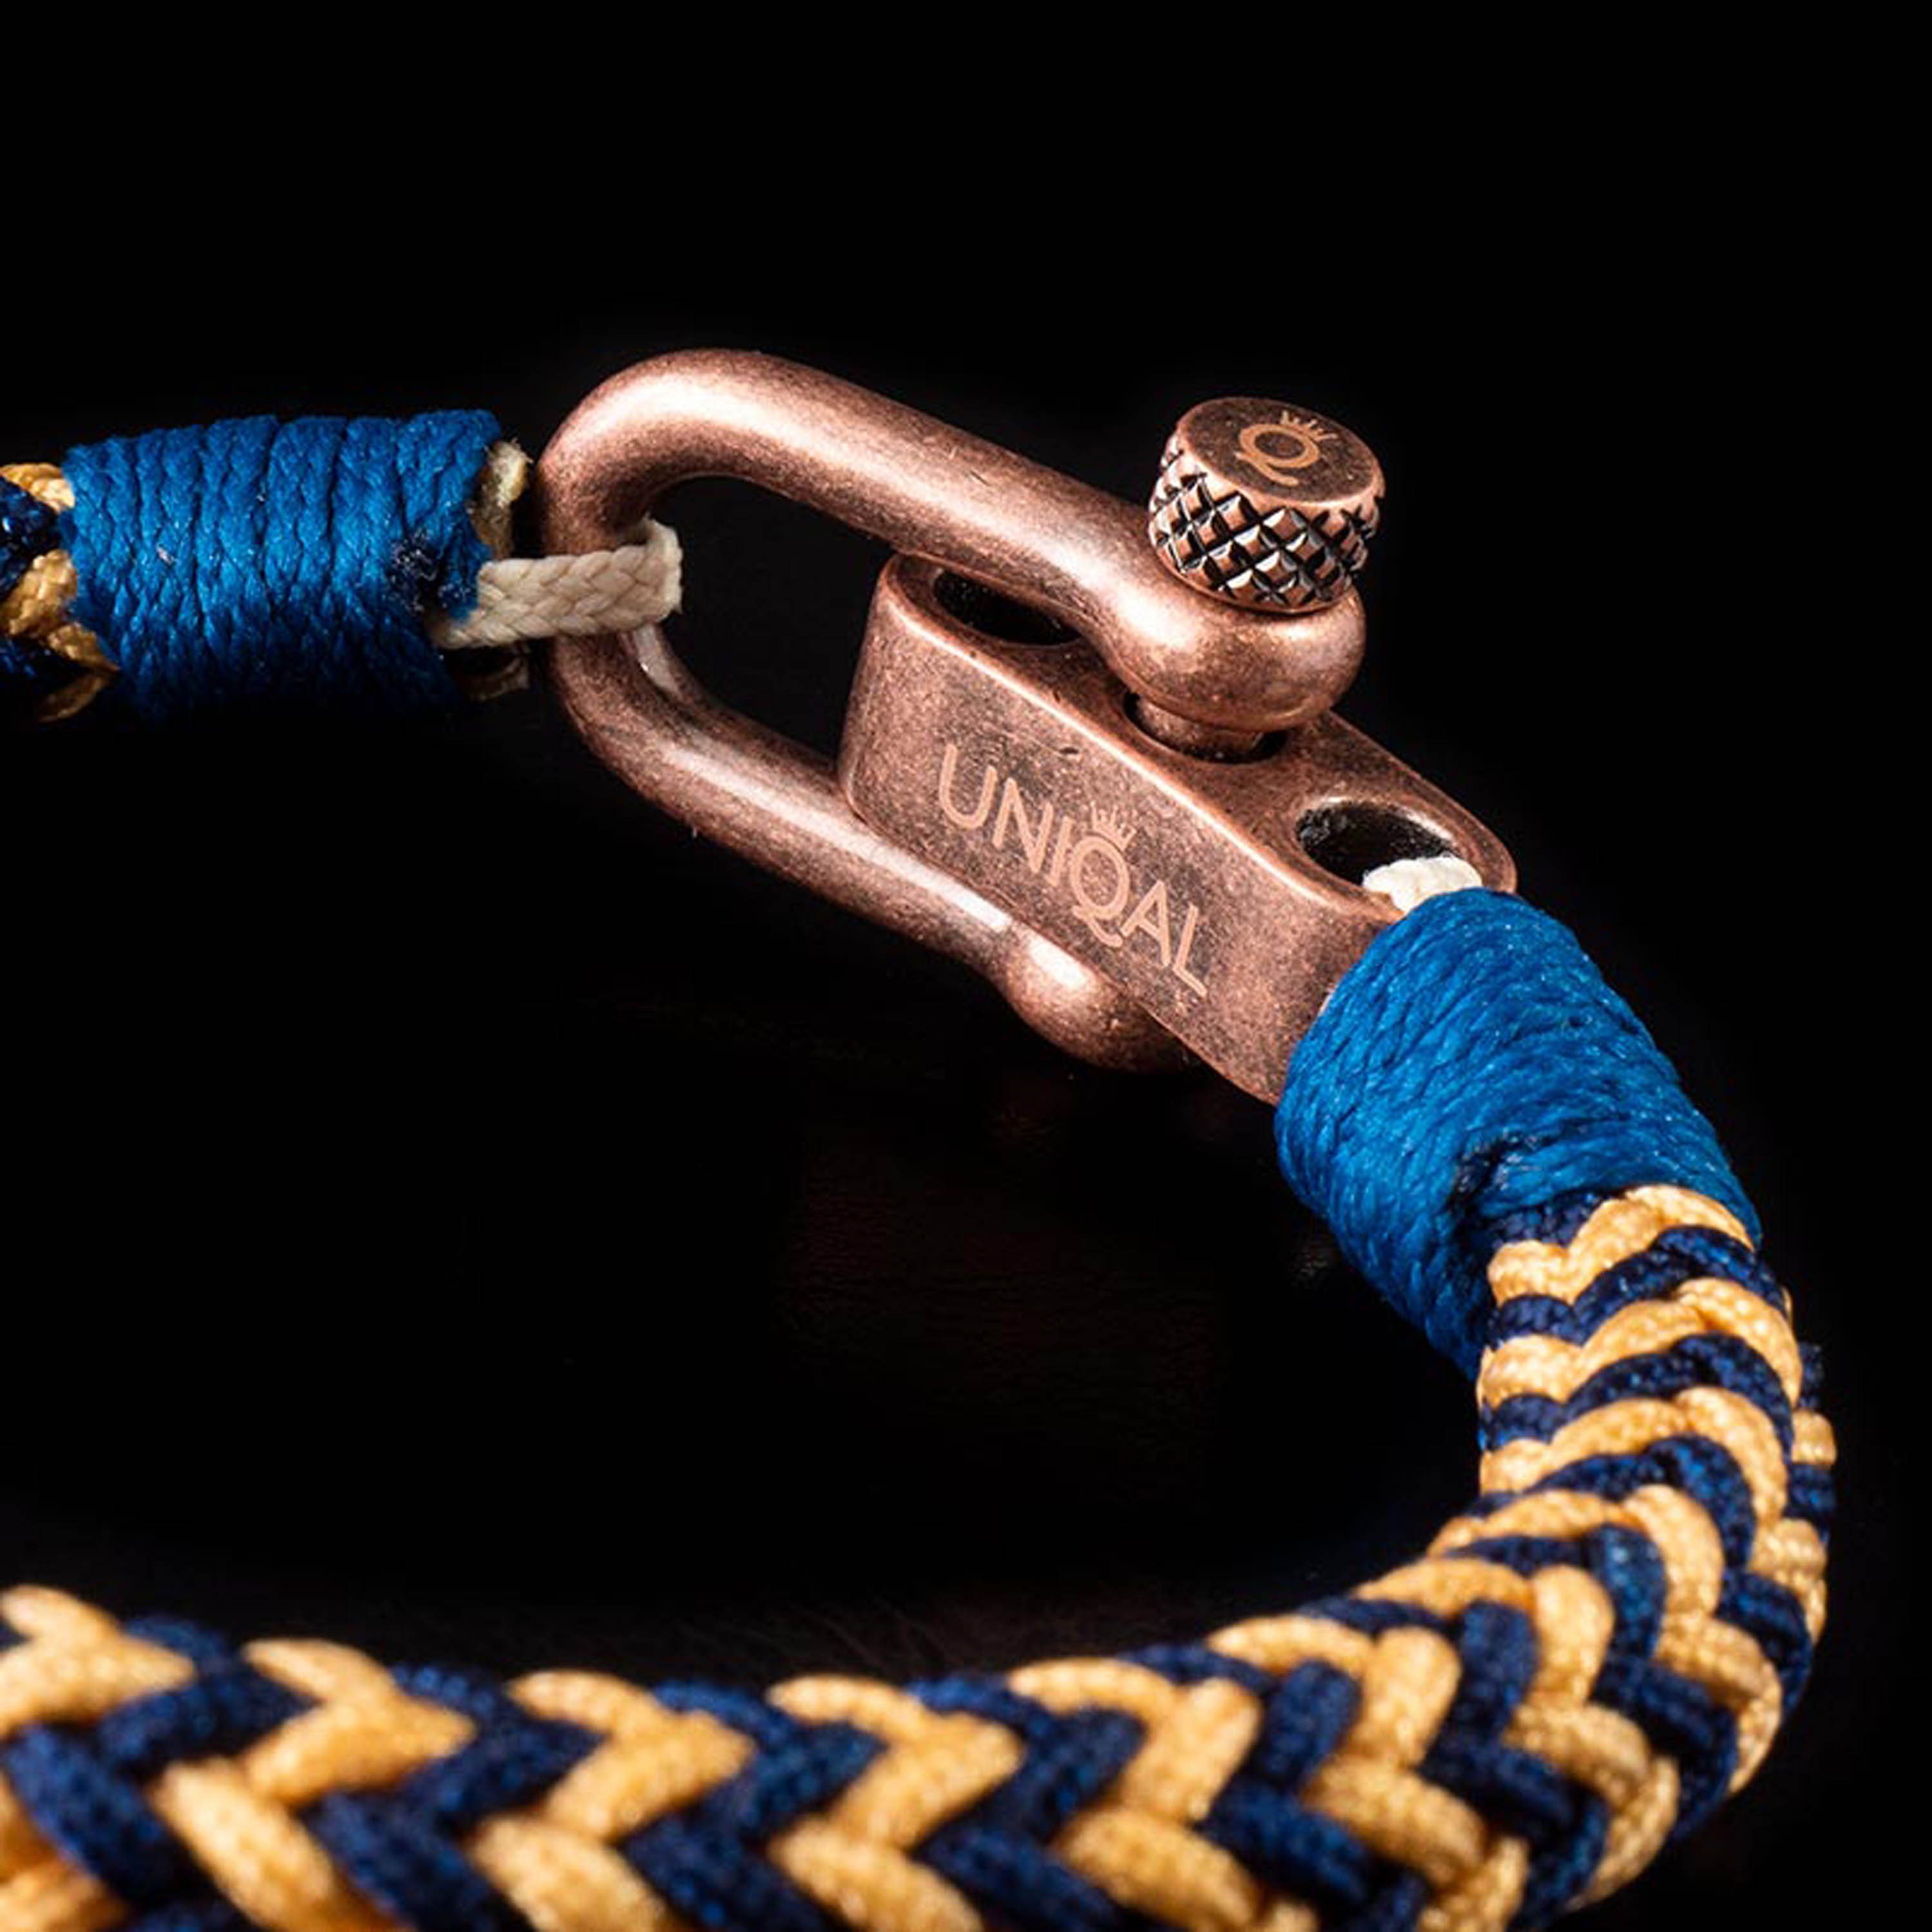 Segeltau, nautics, (Edelstahl, Schäckel maritime, UNIQAL.de Casual Maritime Armband Daryah handgefertigt) Armband Style, aus "OCEAN" Segeltau